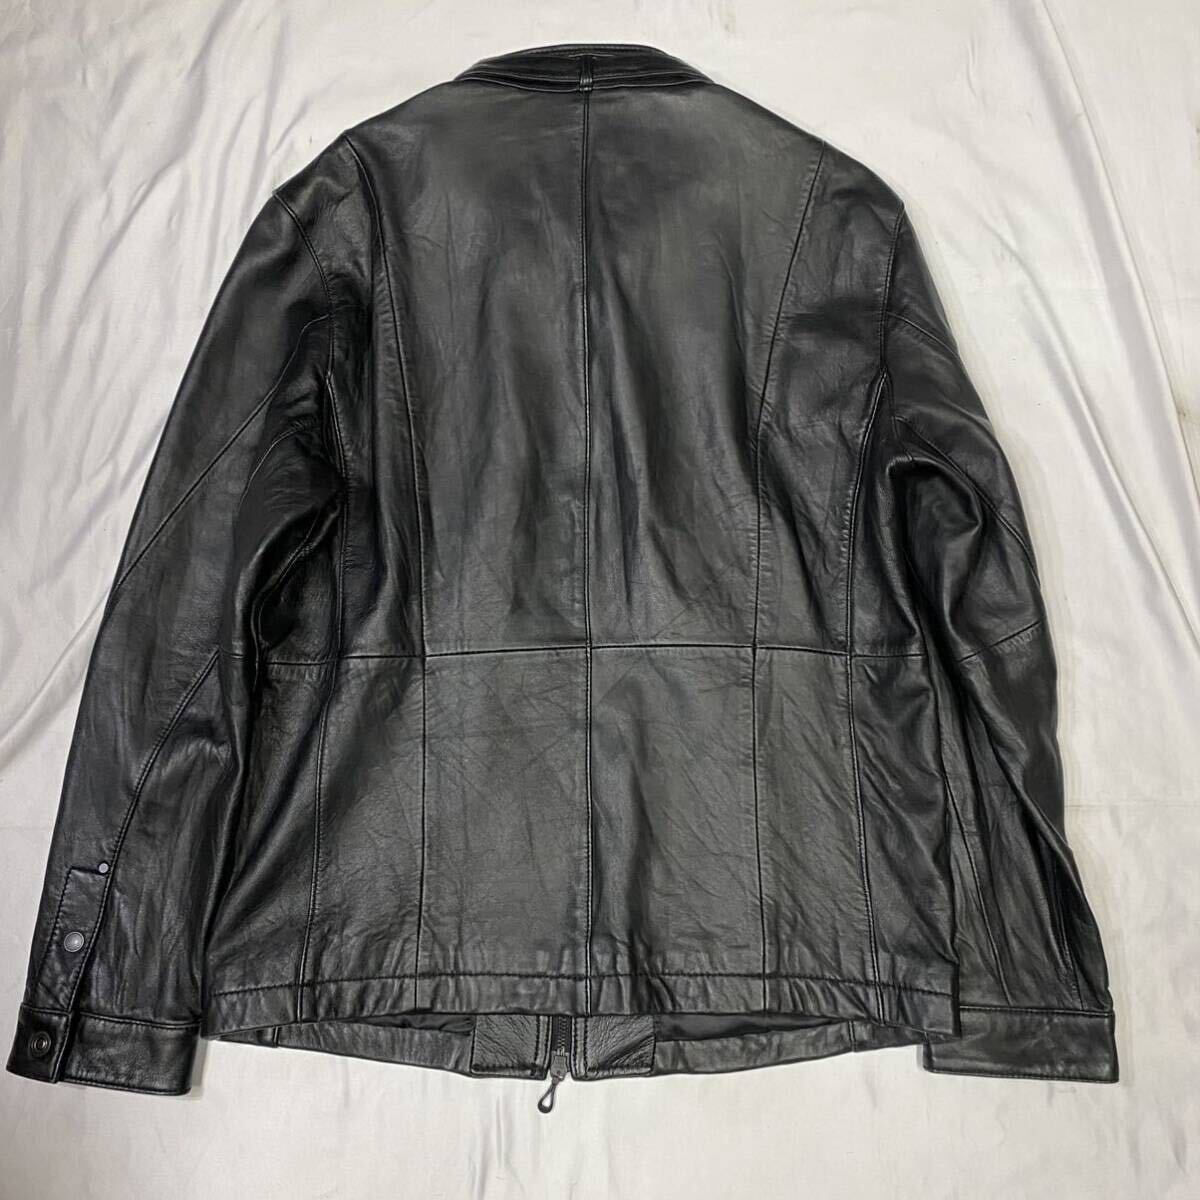 Rare 00's NCFM Lamb leather jacket JAPANESE LABEL archive goa ifsixwasnine kmrii share spirit lgb 14th addictionの画像5